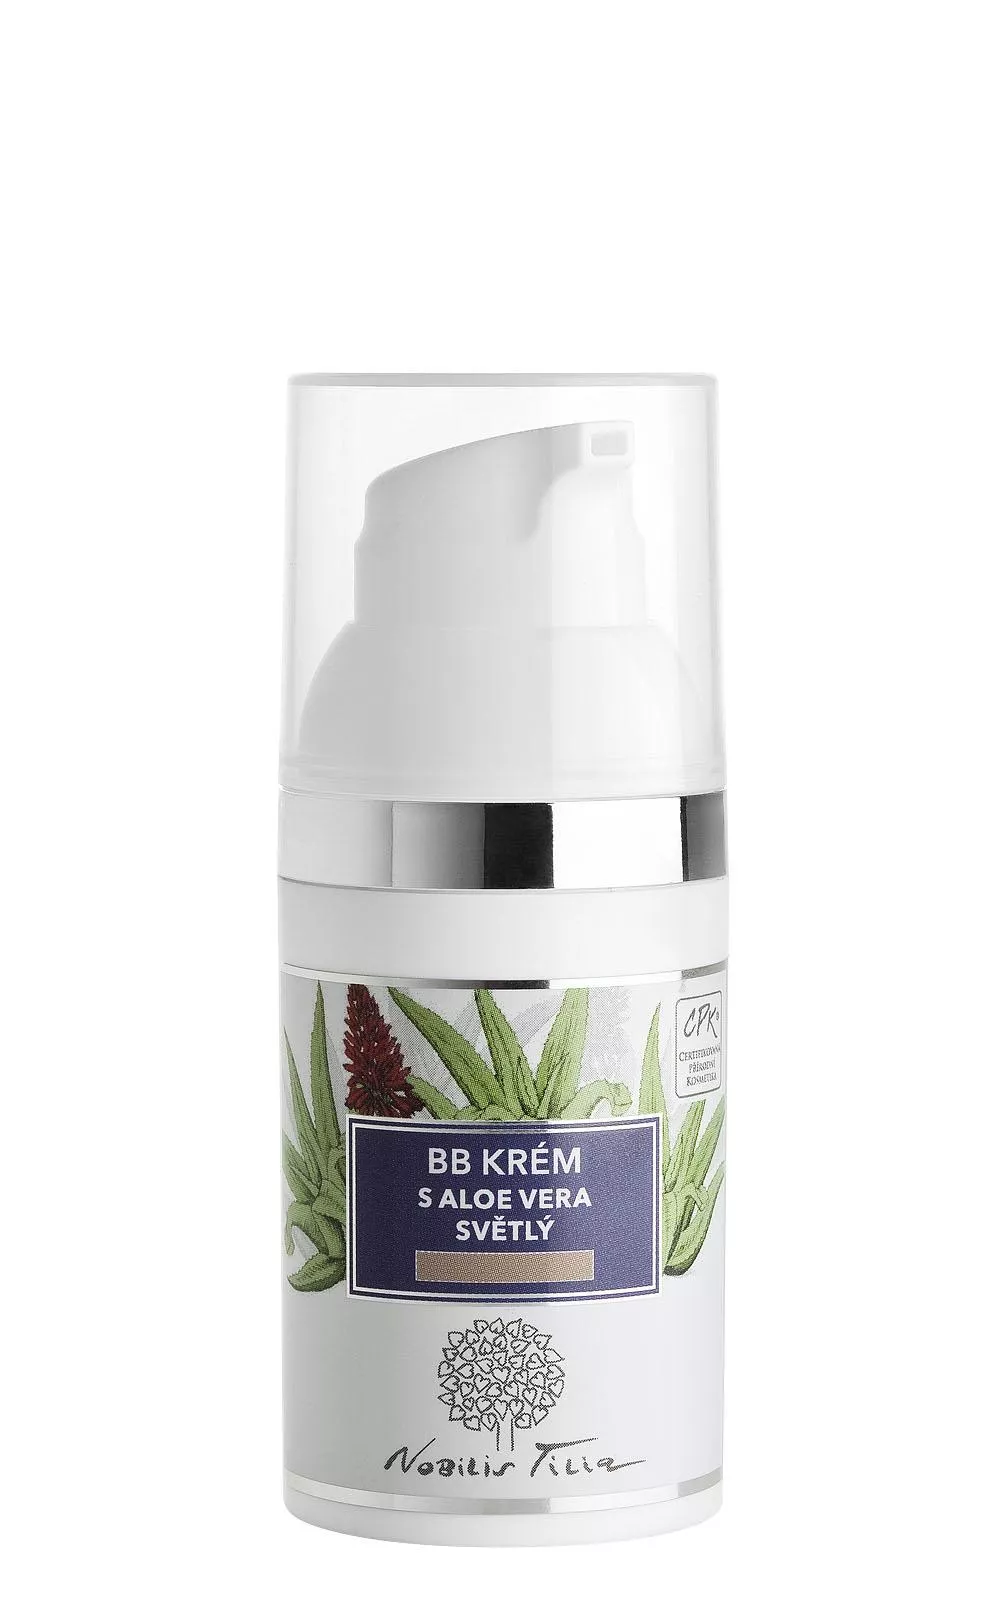 Nobilis Tilia BB cream con Aloe vera light 30ml